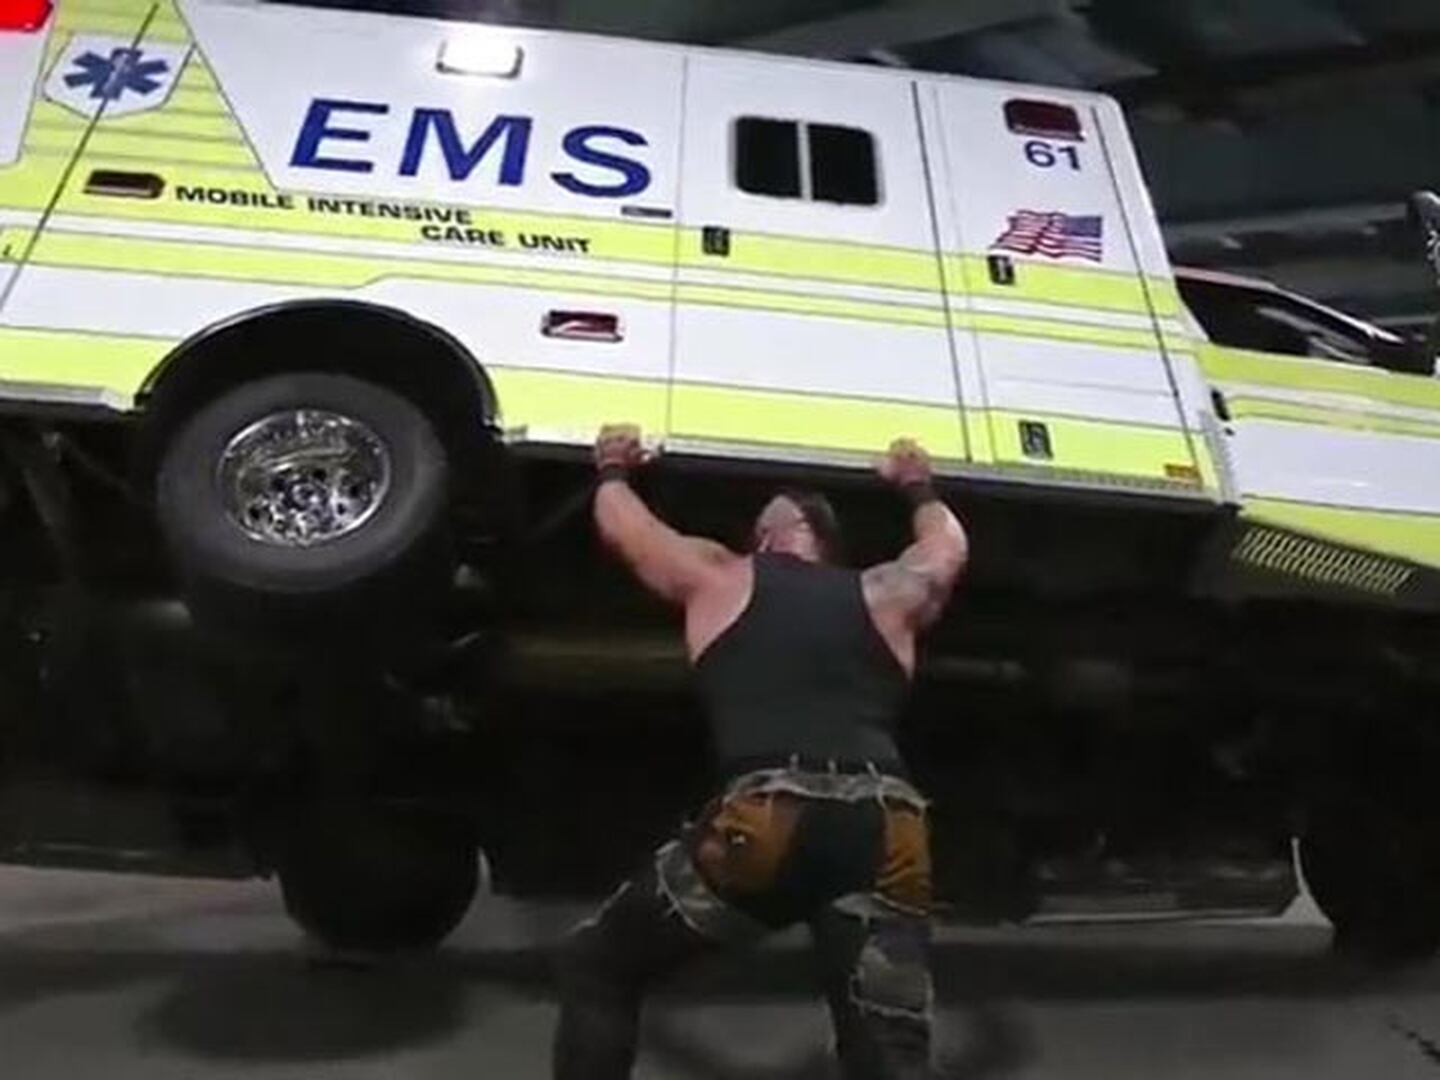 ¡Strowman dio vuelta la ambulancia!